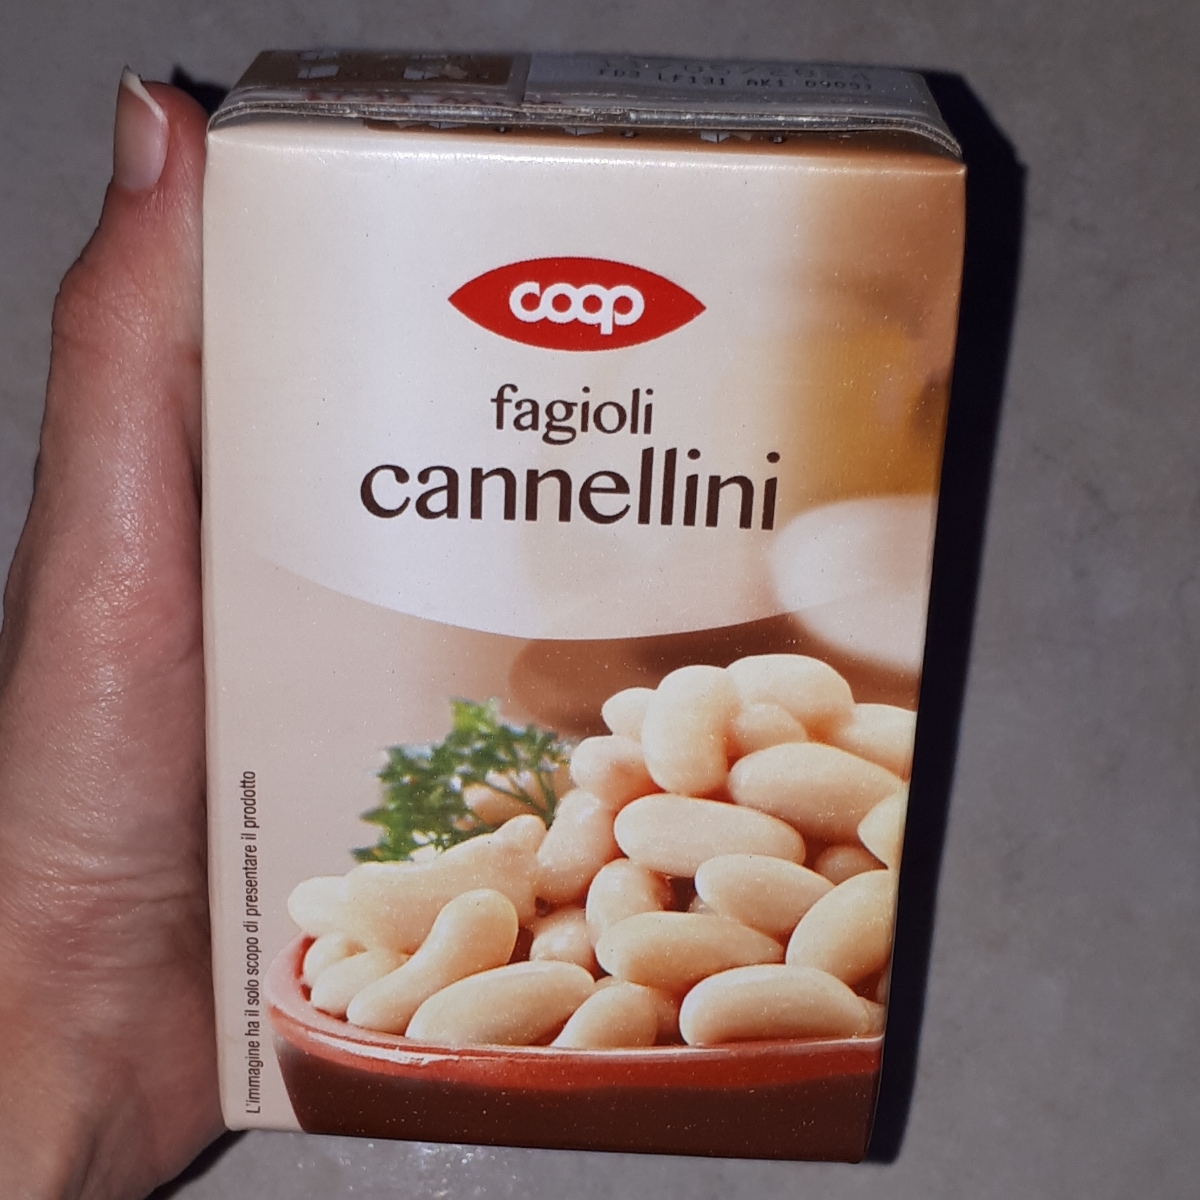 Coop Fagioli cannellini Reviews